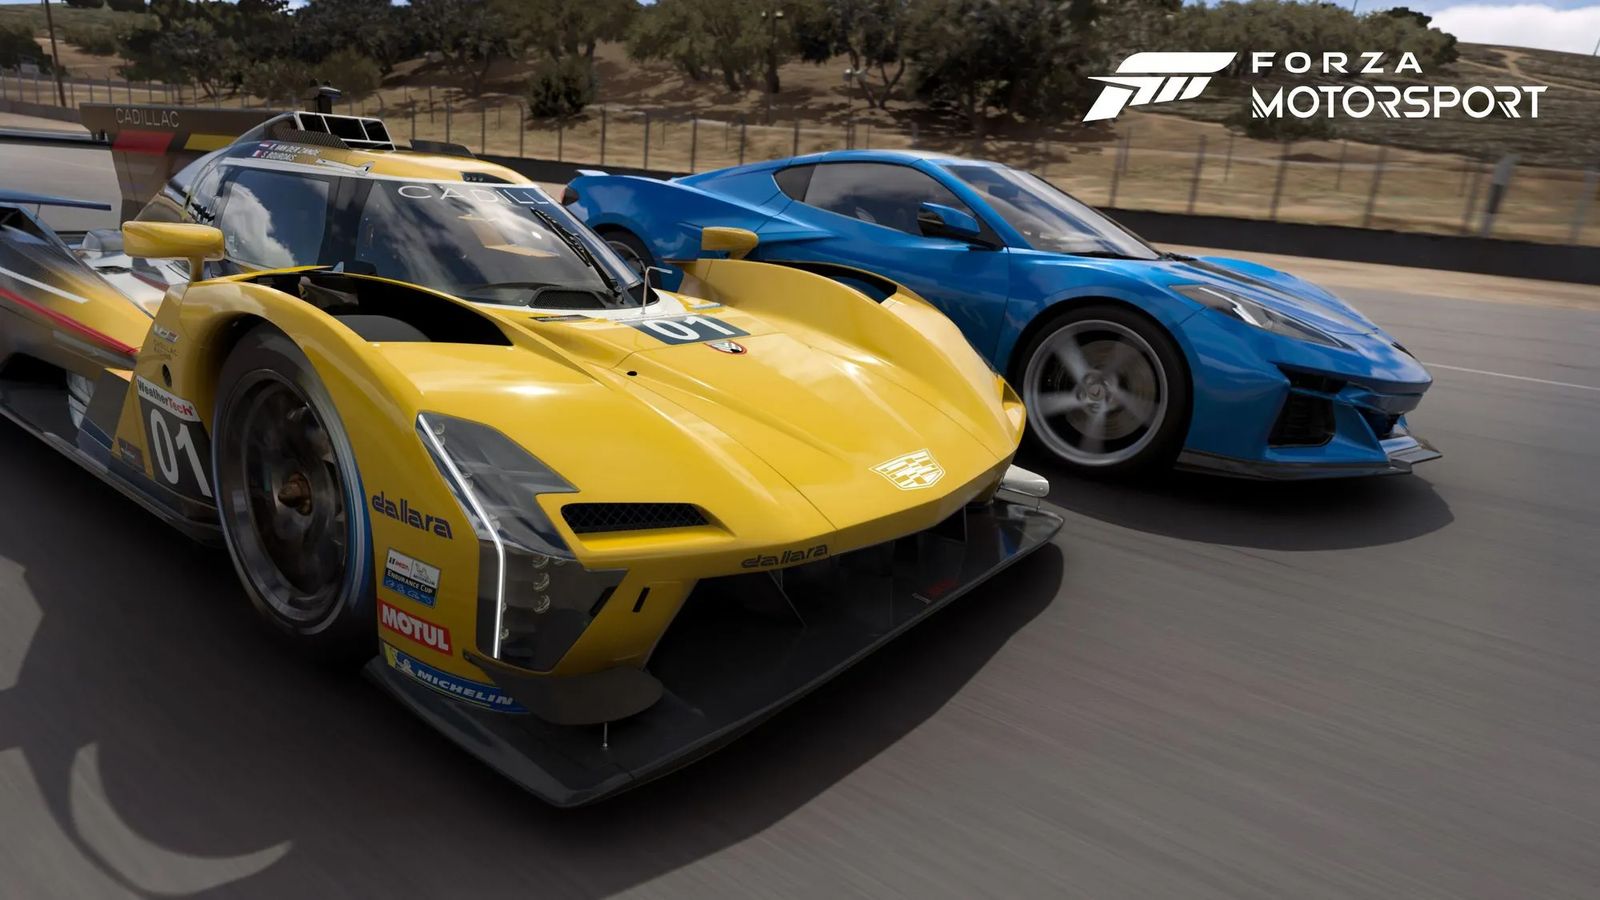 Forza Motorsport credit exploit